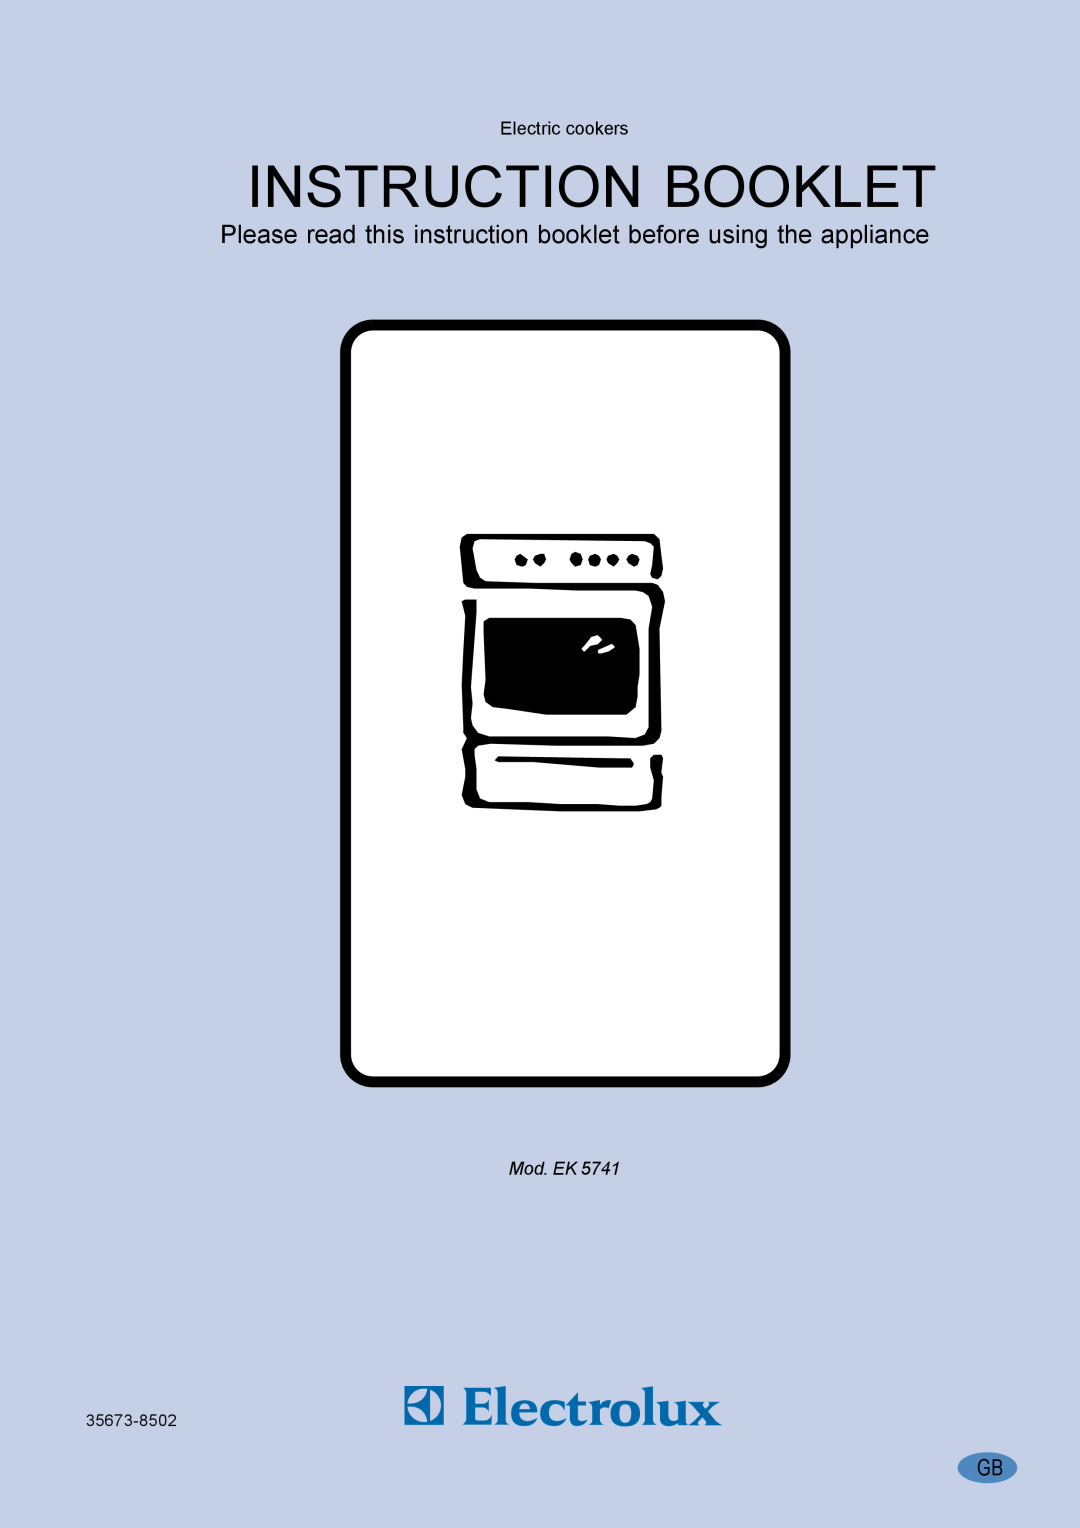 Electrolux EK 5741 manual Instruction Booklet, Please read this instruction booklet before using the appliance, Mod. EK 